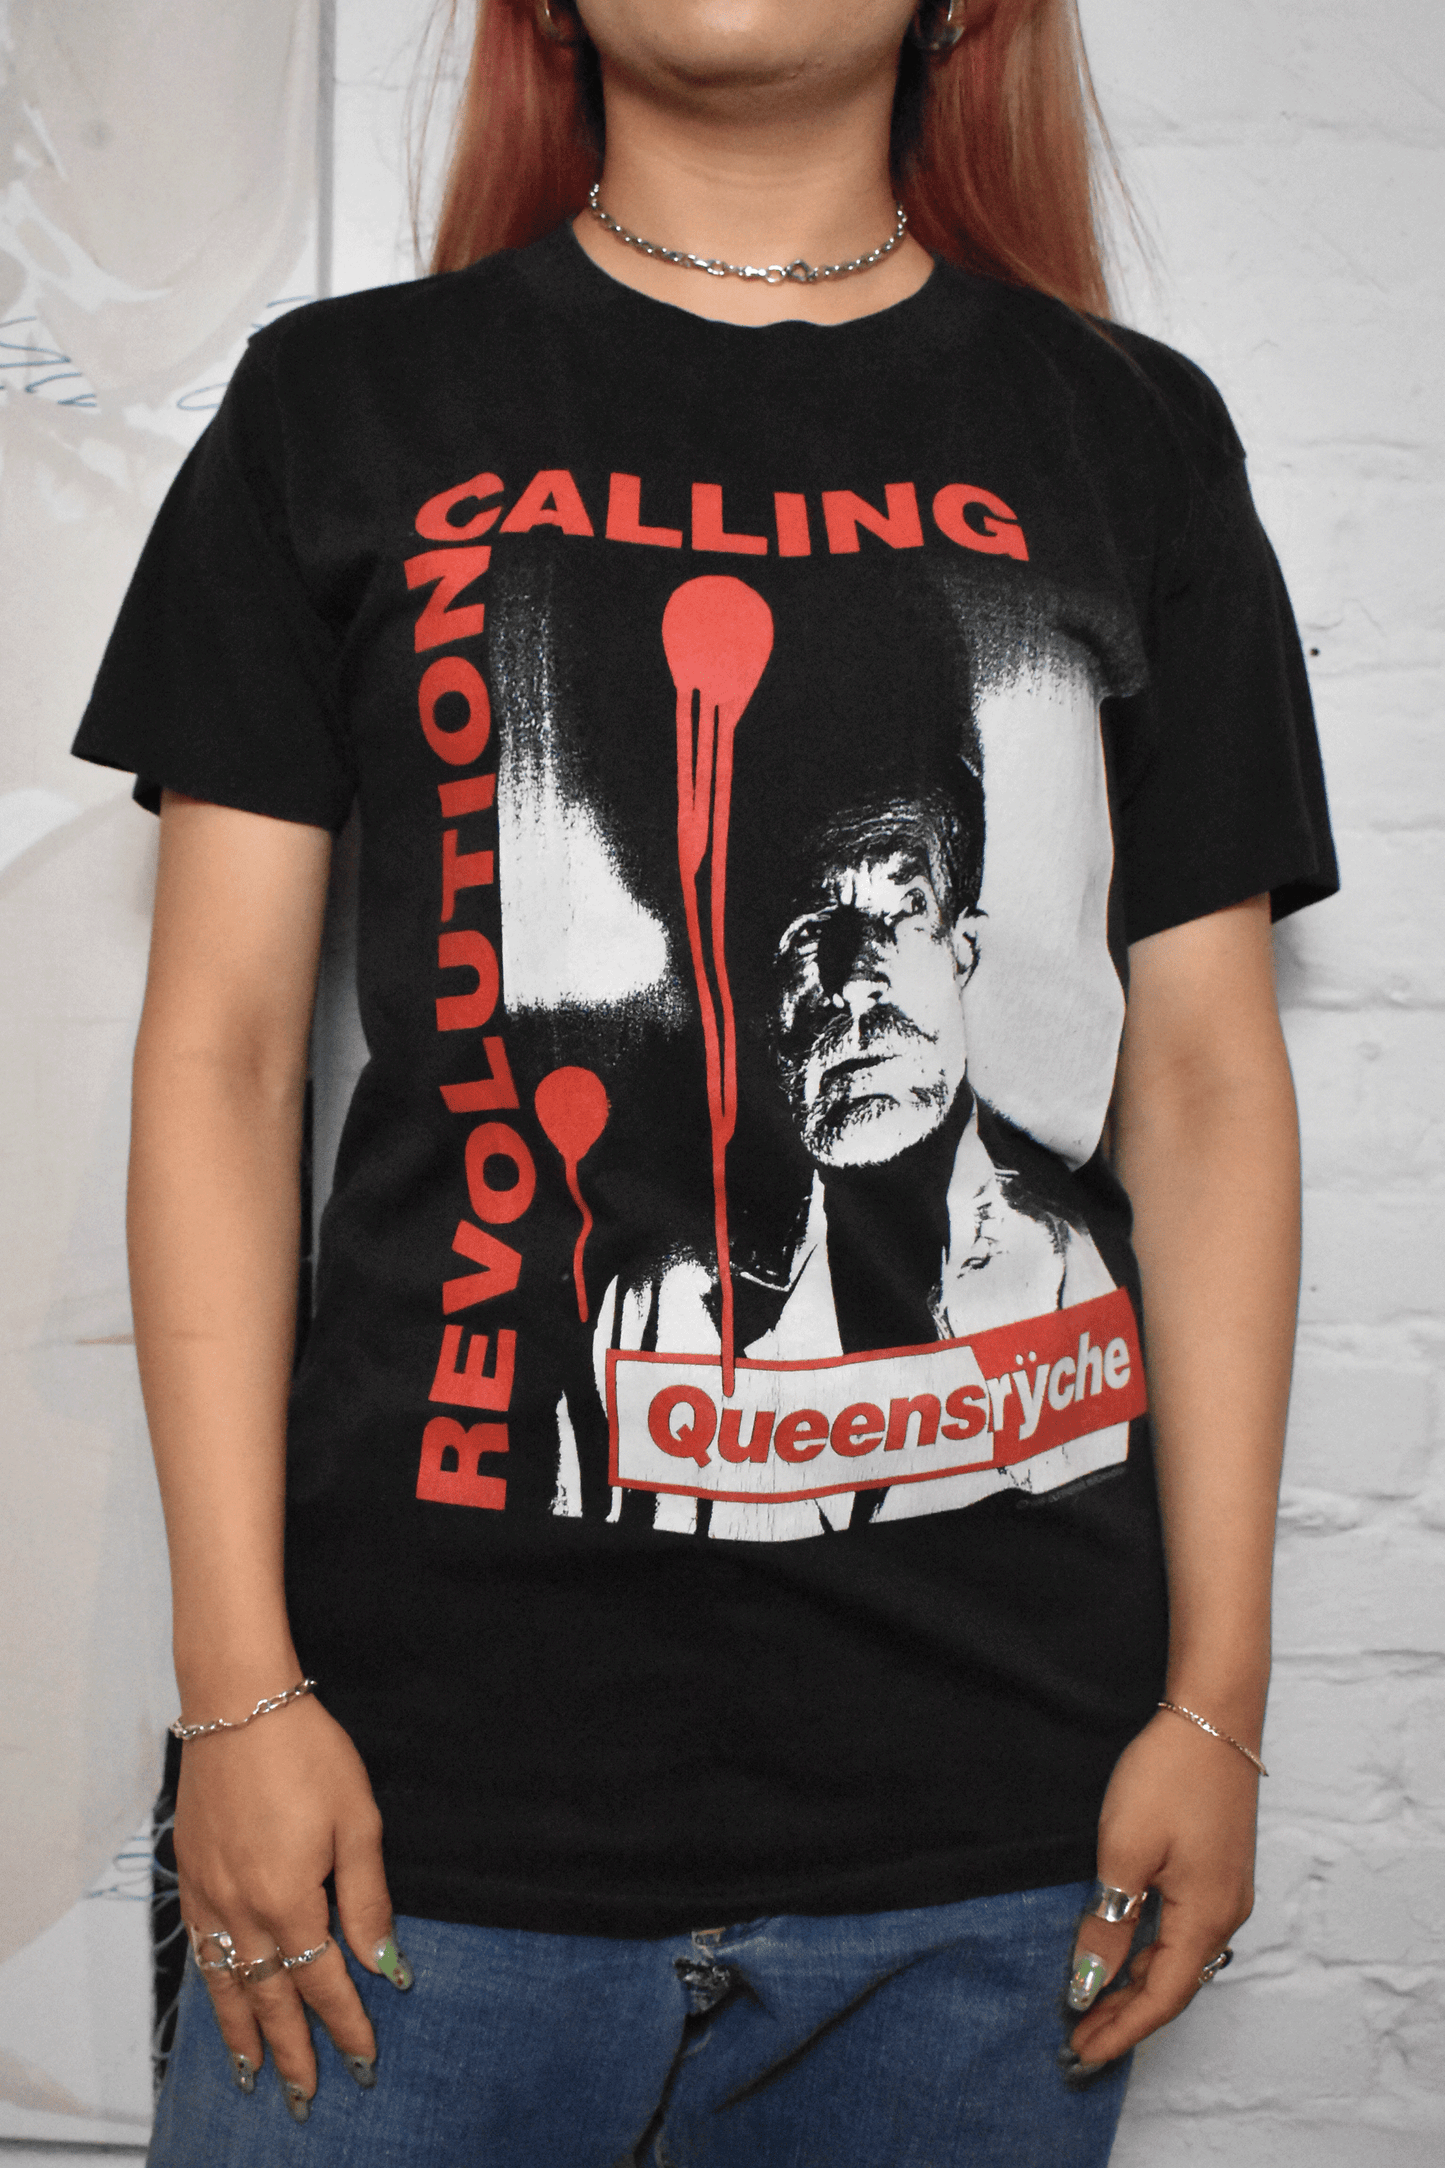 Vintage 1988 "Queensryche Revolution Calling" Concert T-shirt